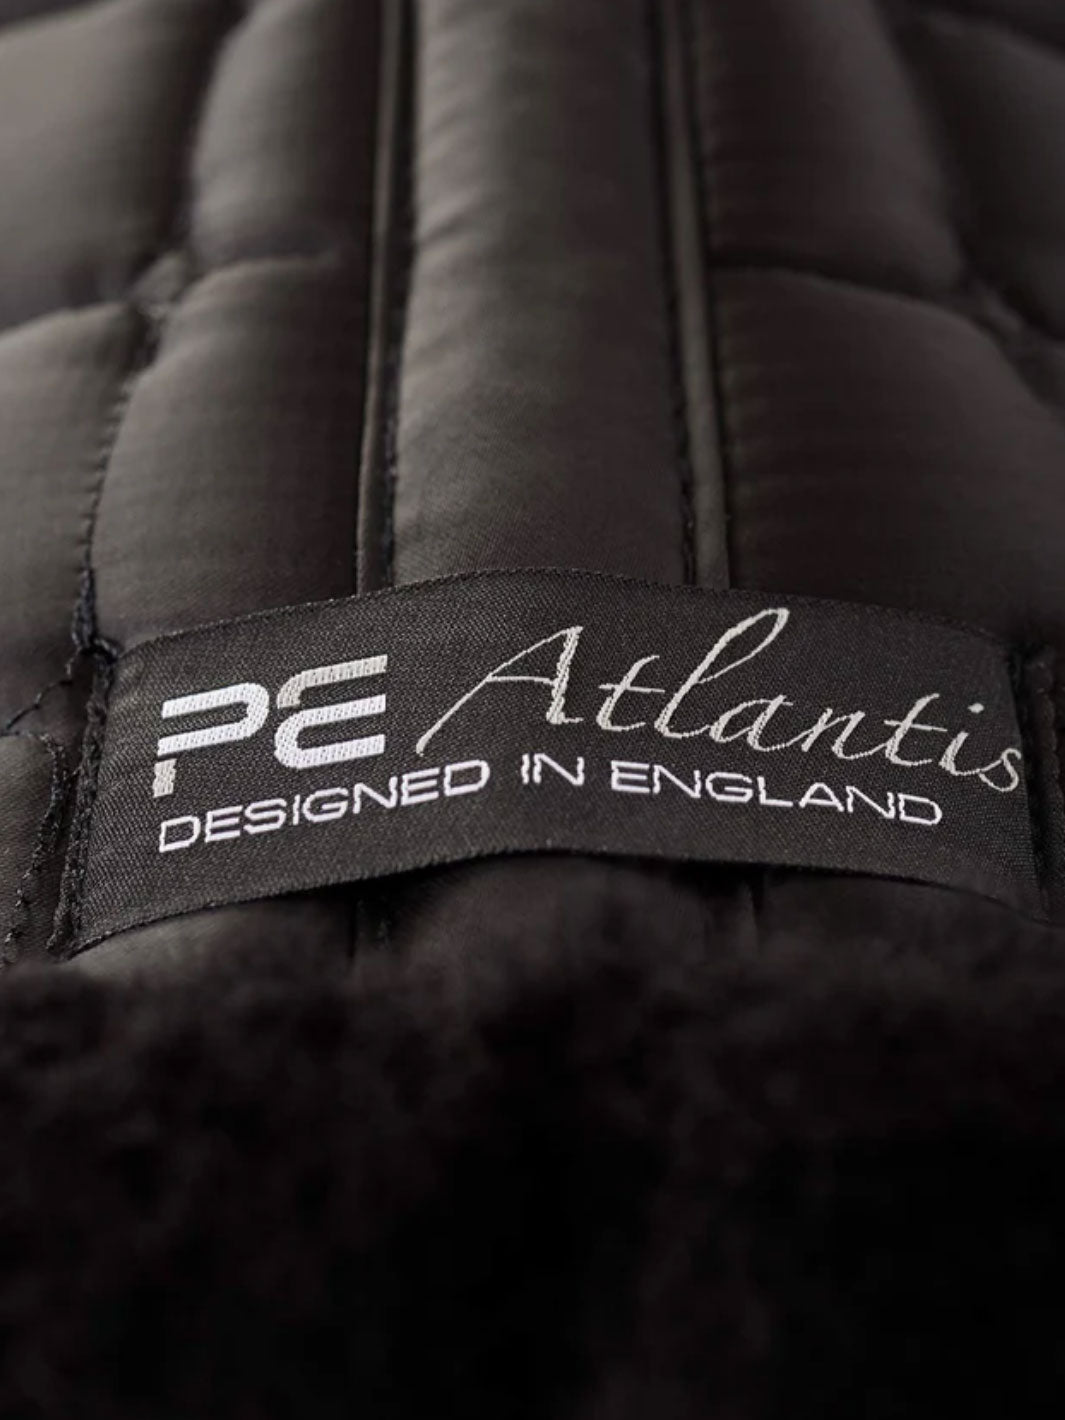 PE Atlantis CC Satin Merino Wool Dressage Square Black